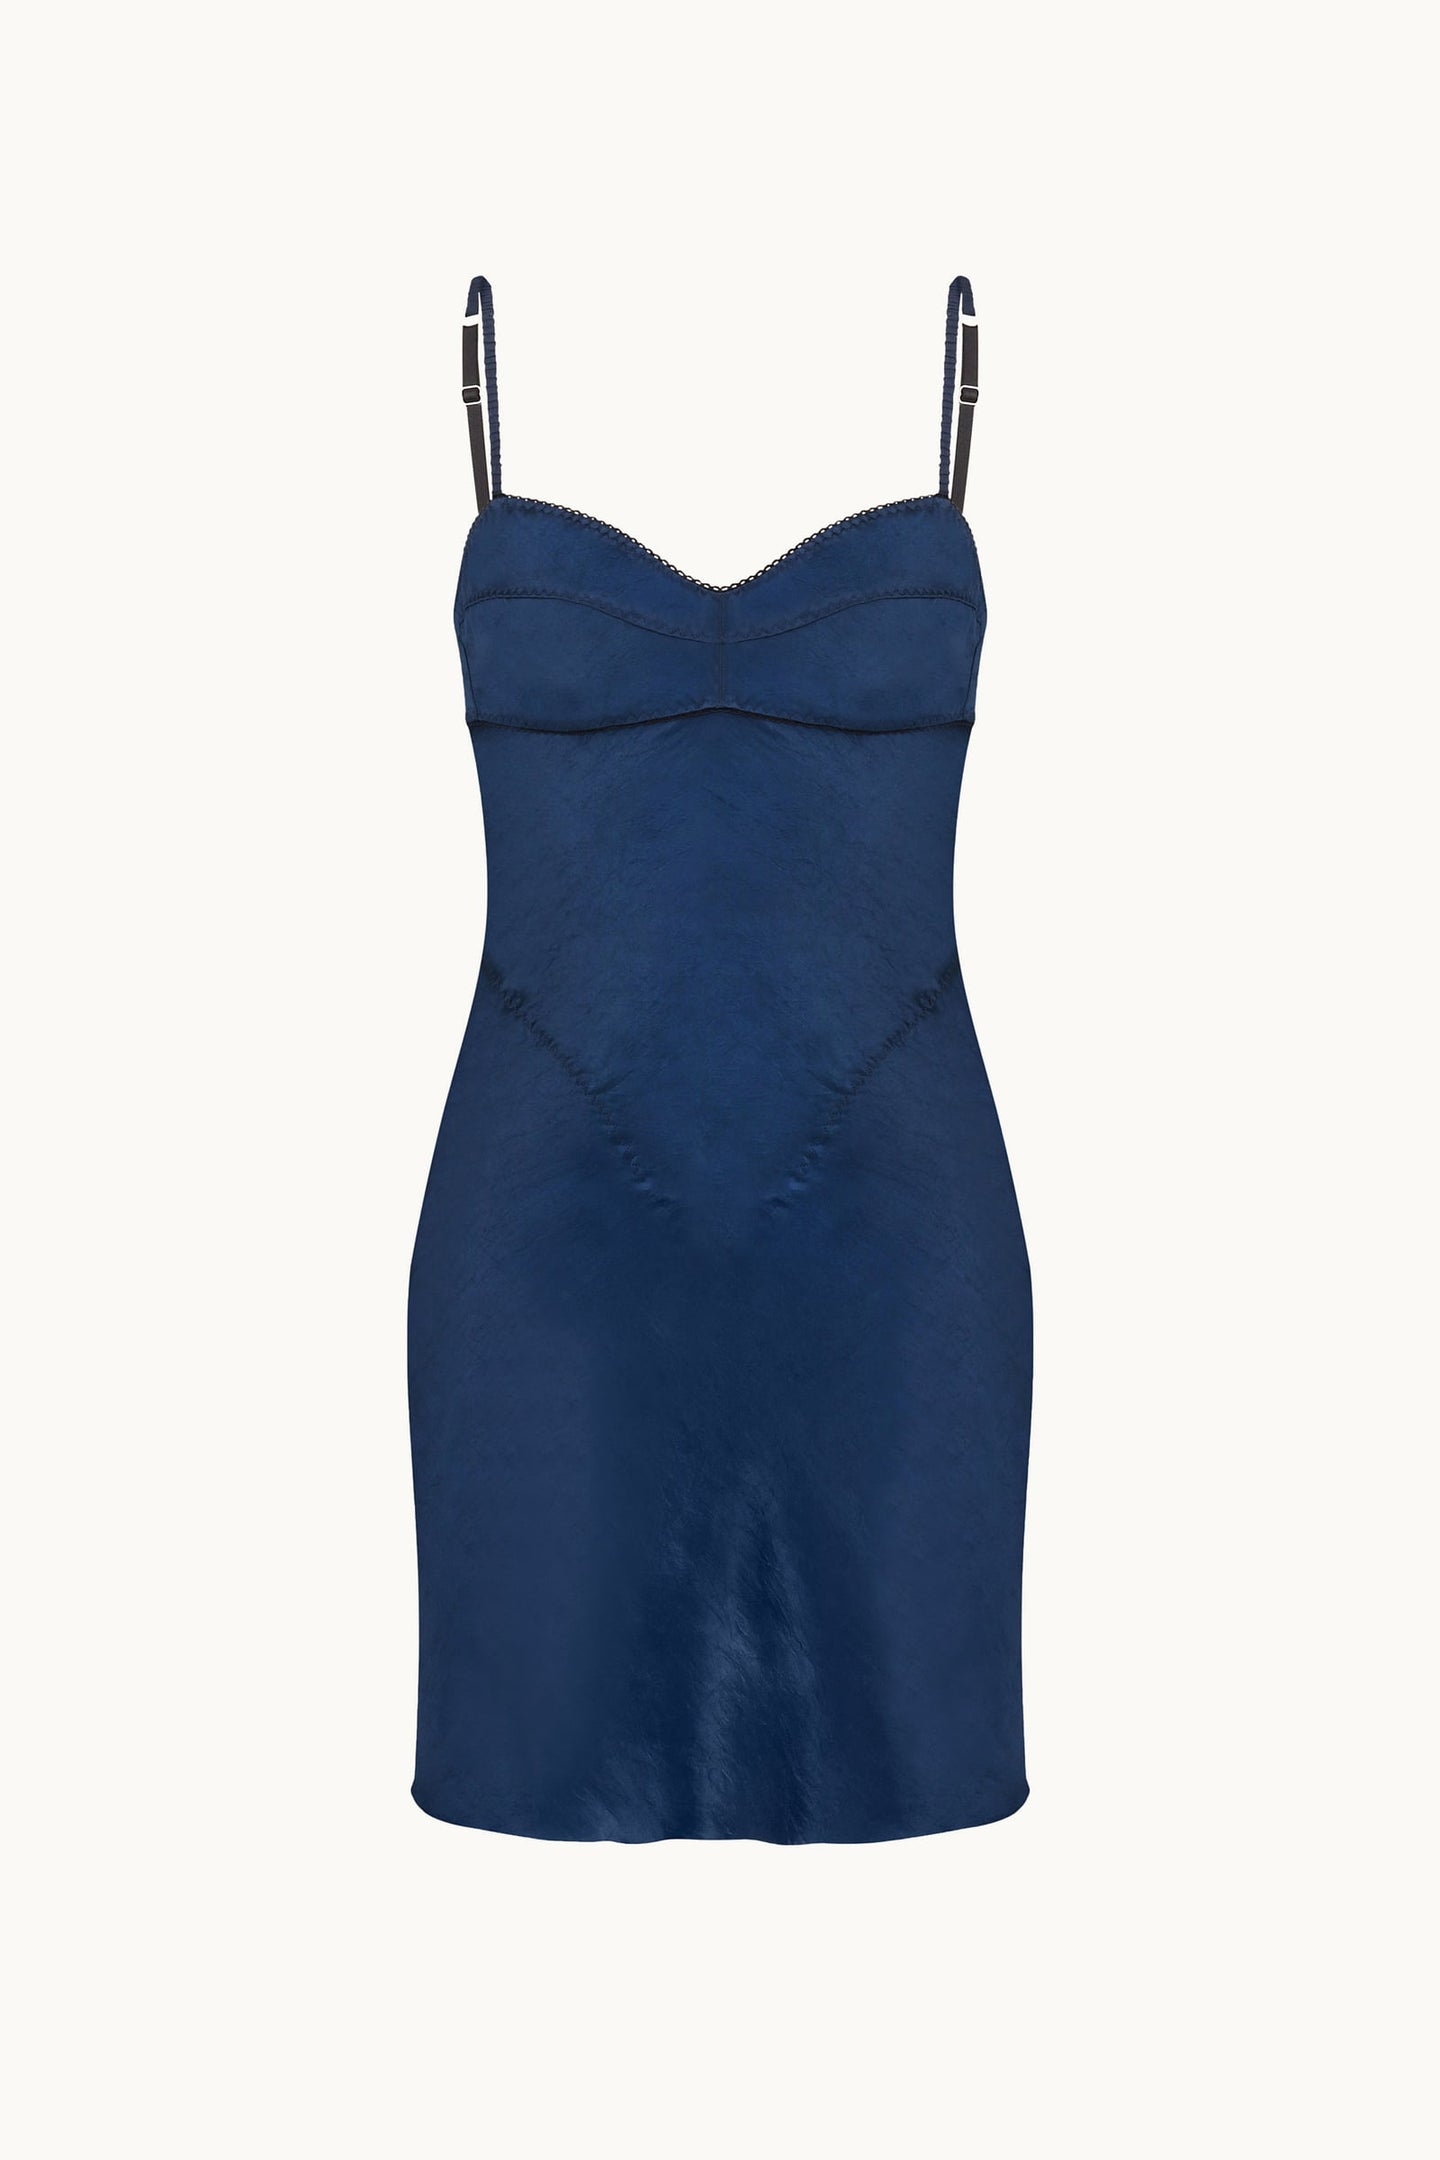 Mini Waterlily dark blue dress front view